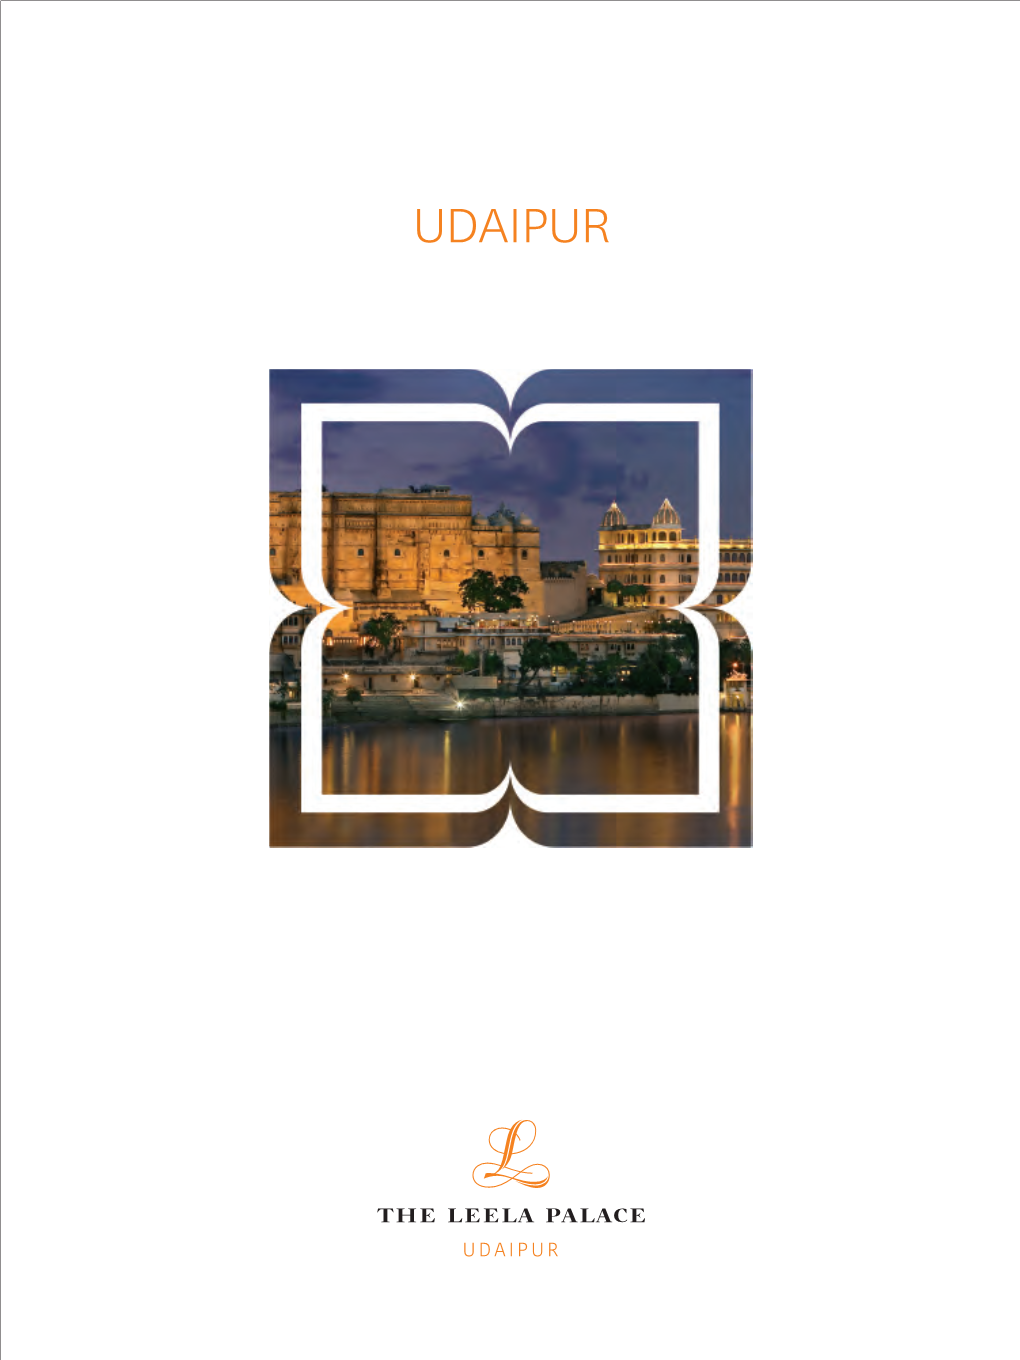 The Leela Udaipur Factsheet